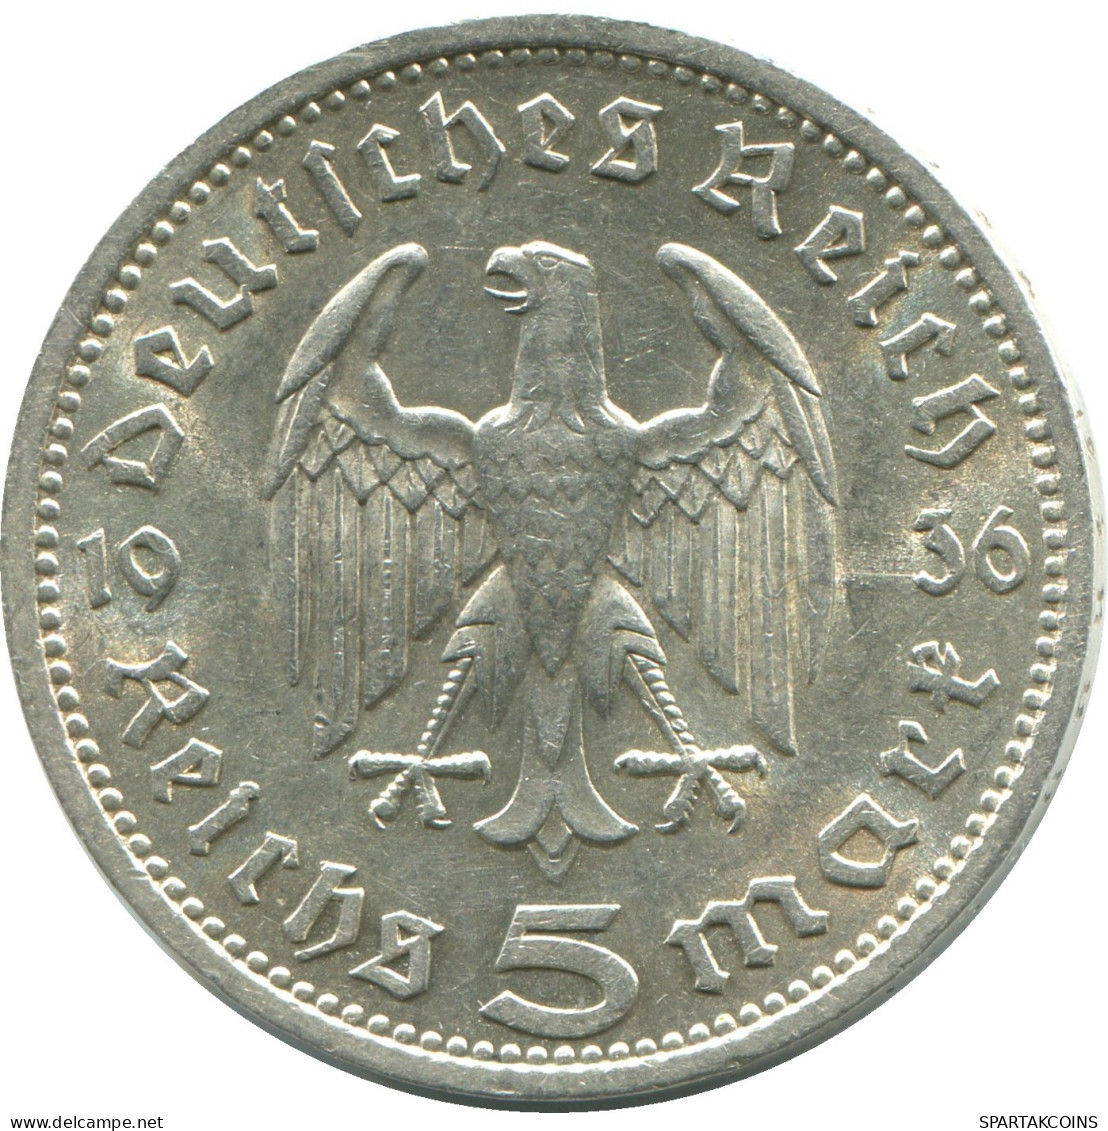 5 REICHSMARK 1936 A SILBER DEUTSCHLAND Münze GERMANY #DE10363.5.D.A - 5 Reichsmark